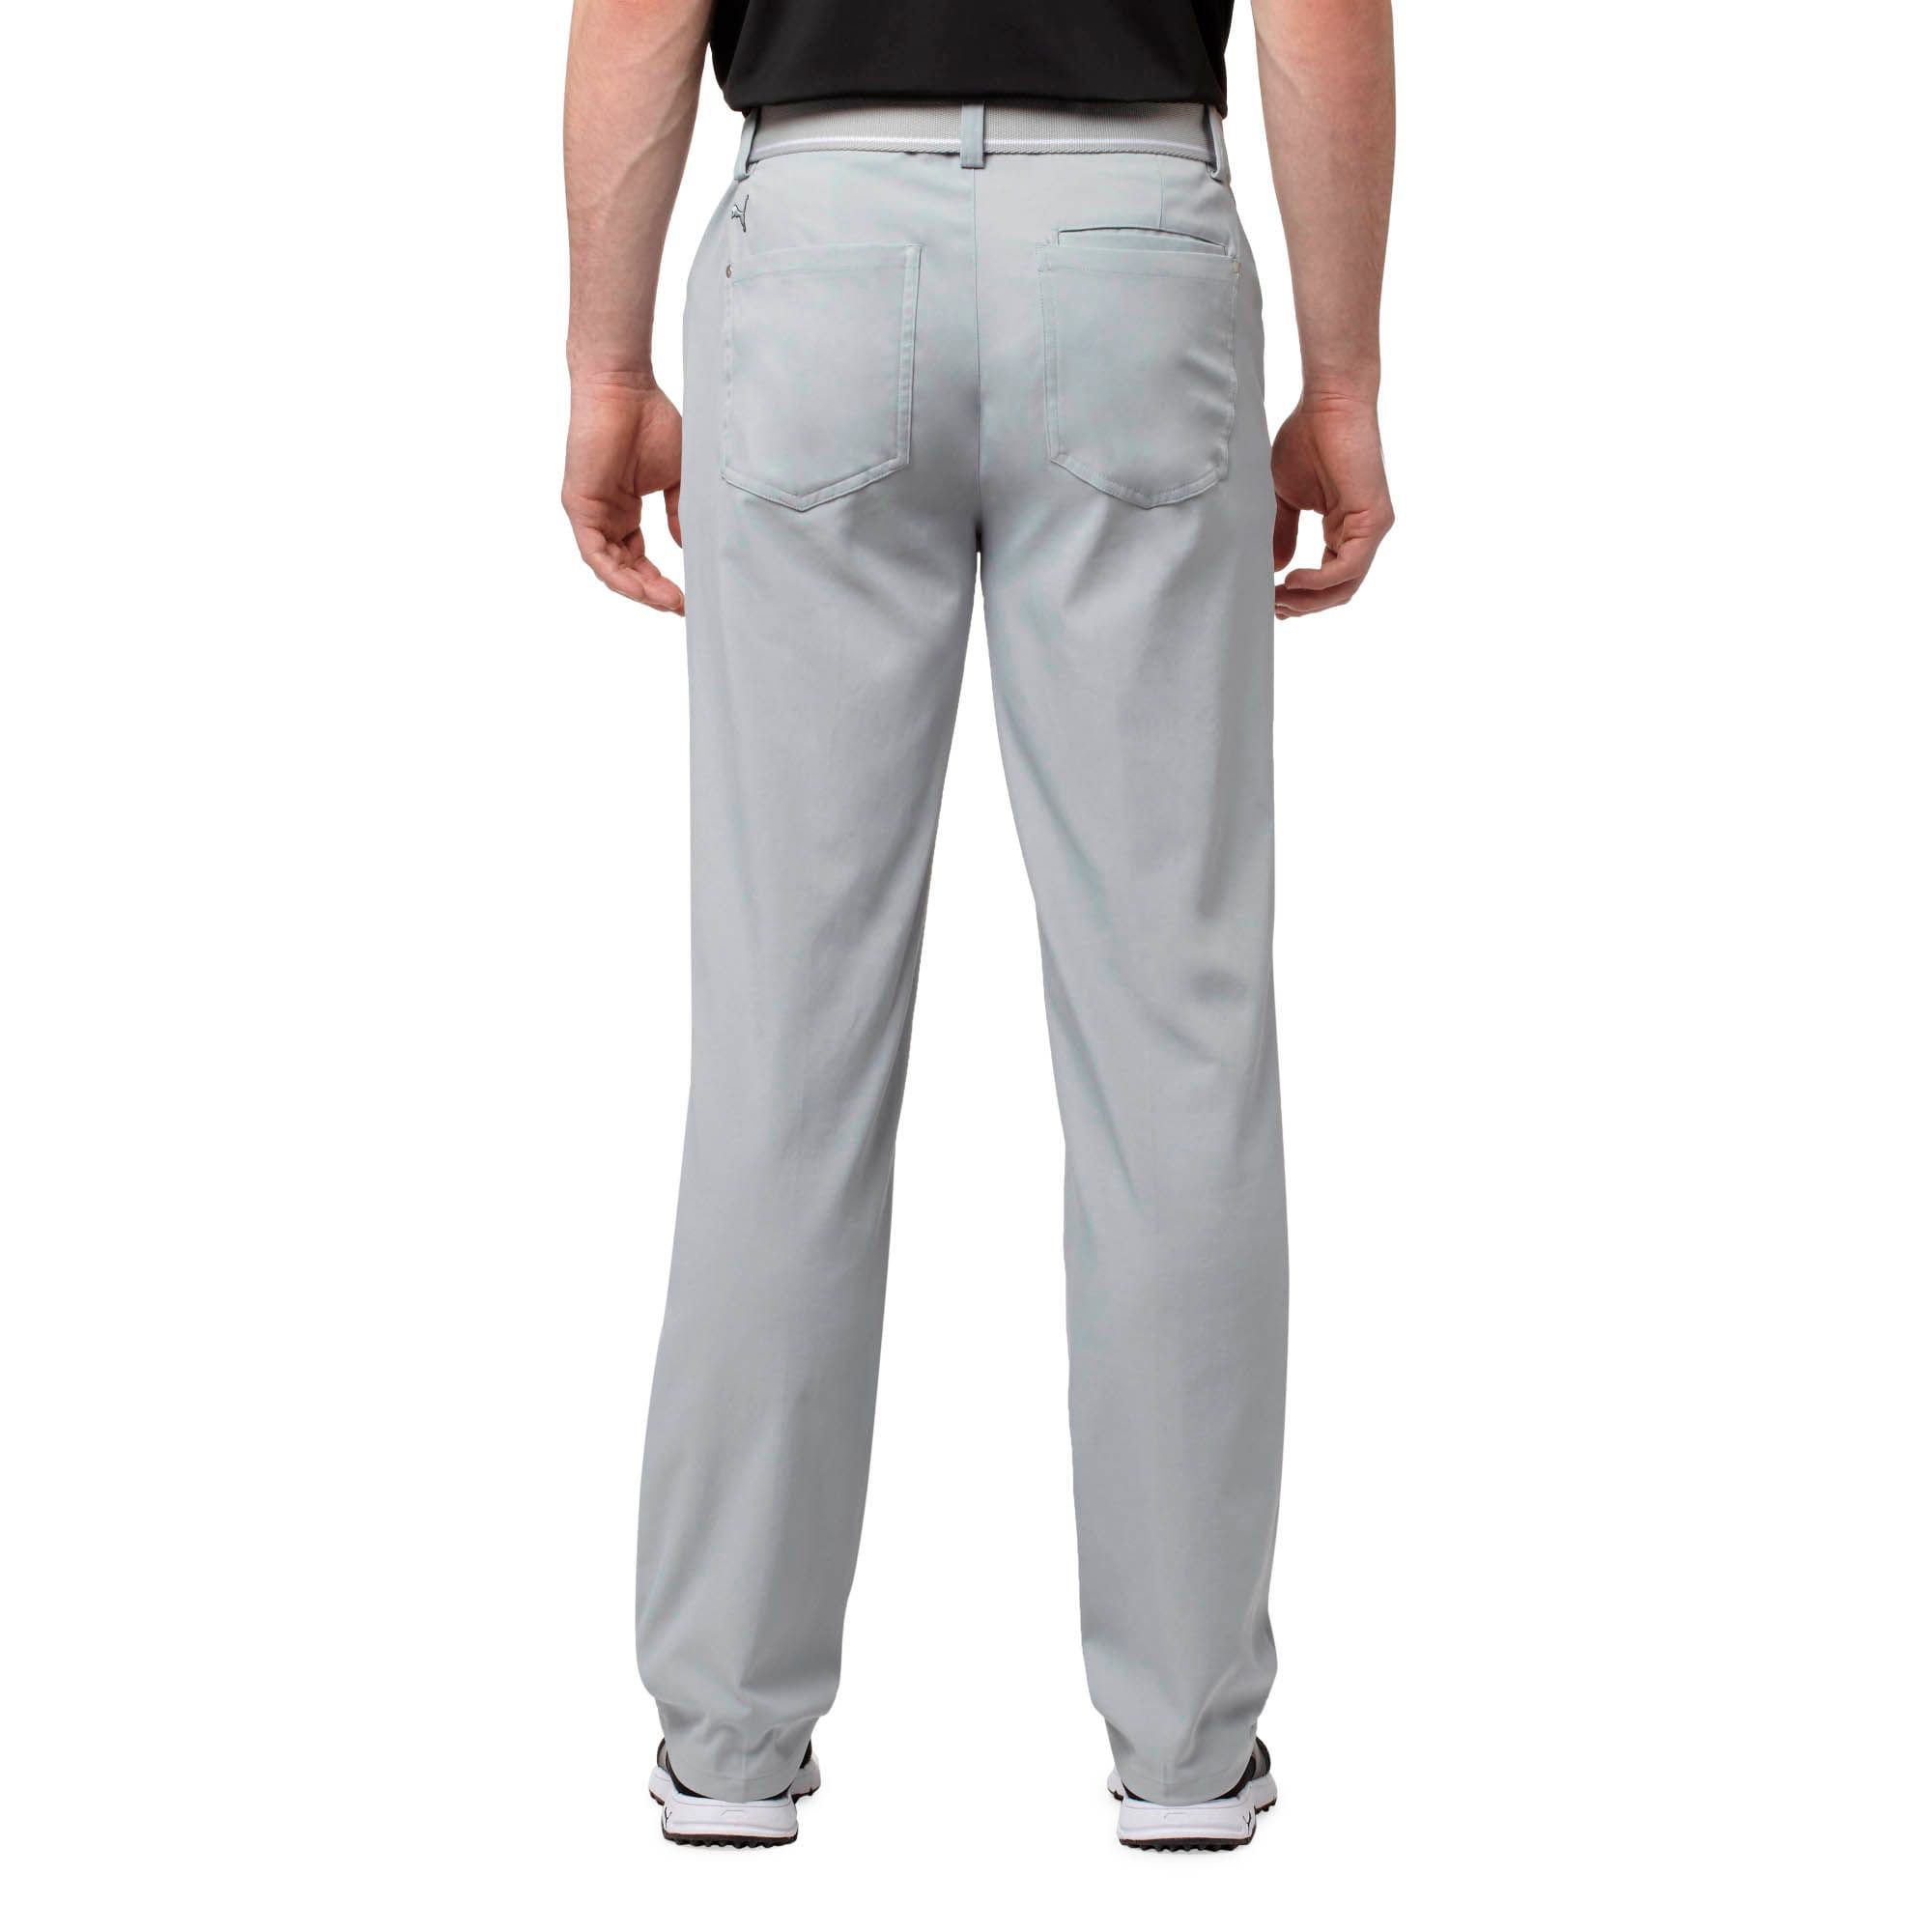 puma 6 pocket golf shorts